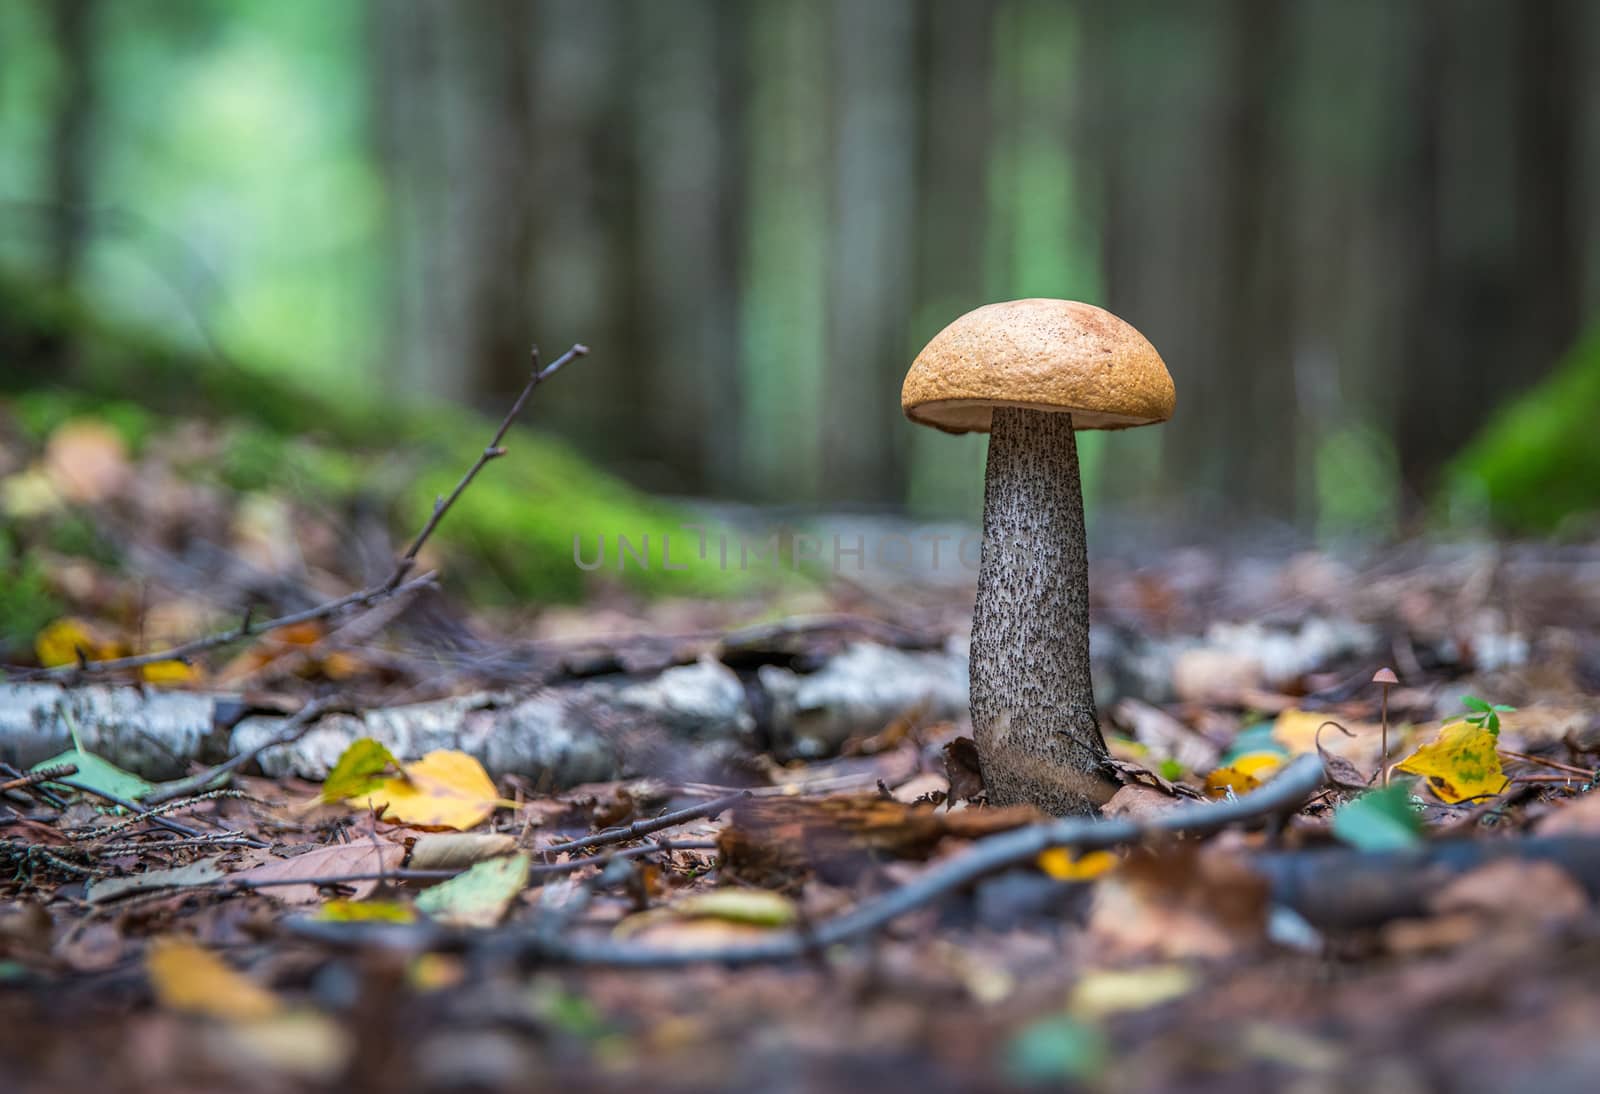 Amazing edible mushroom boletus edulis with blurred background in forest.